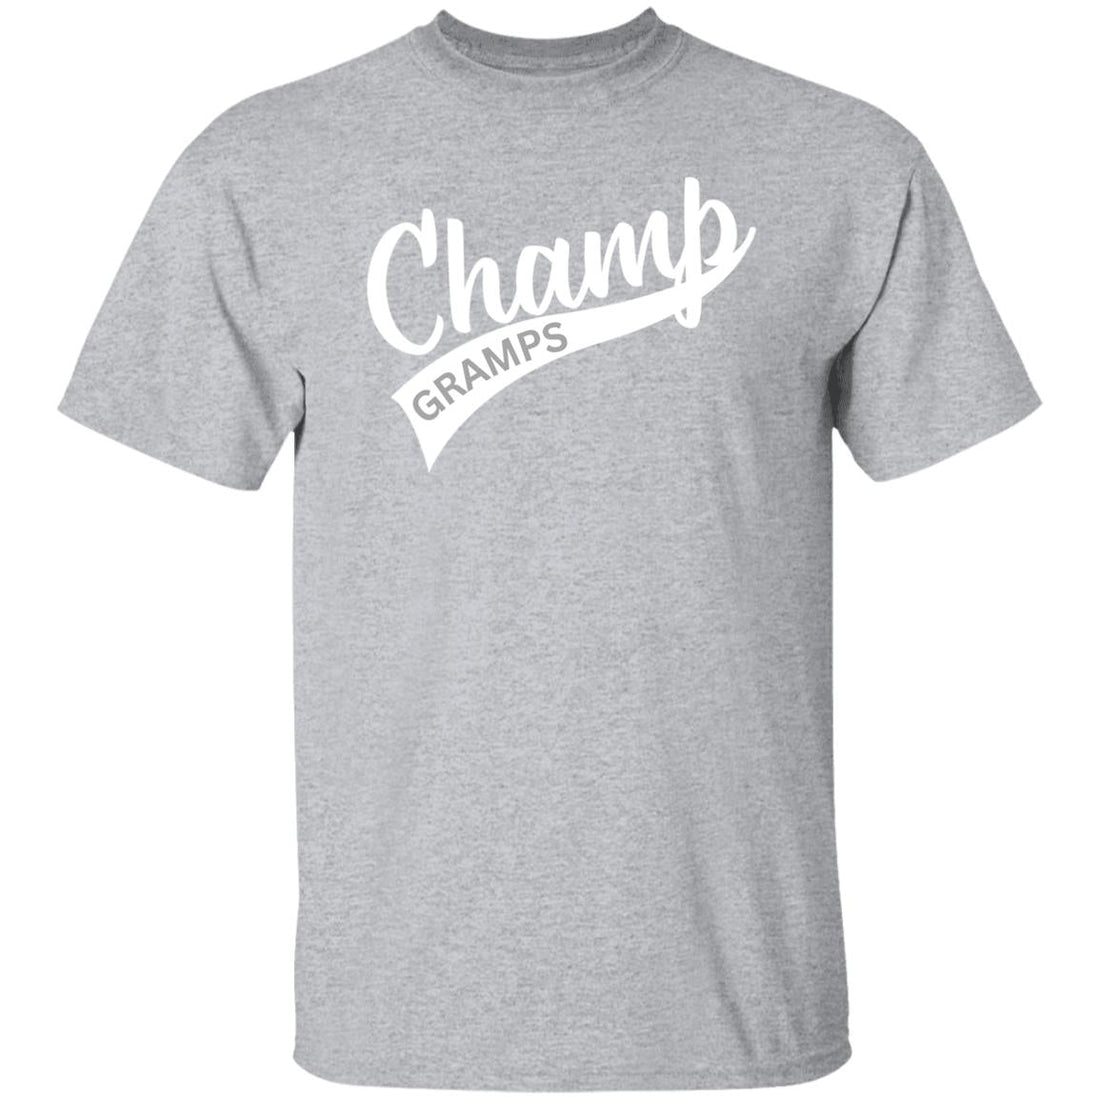 Champ Gramps T-Shirt - T-Shirts - Positively Sassy - Champ Gramps T-Shirt